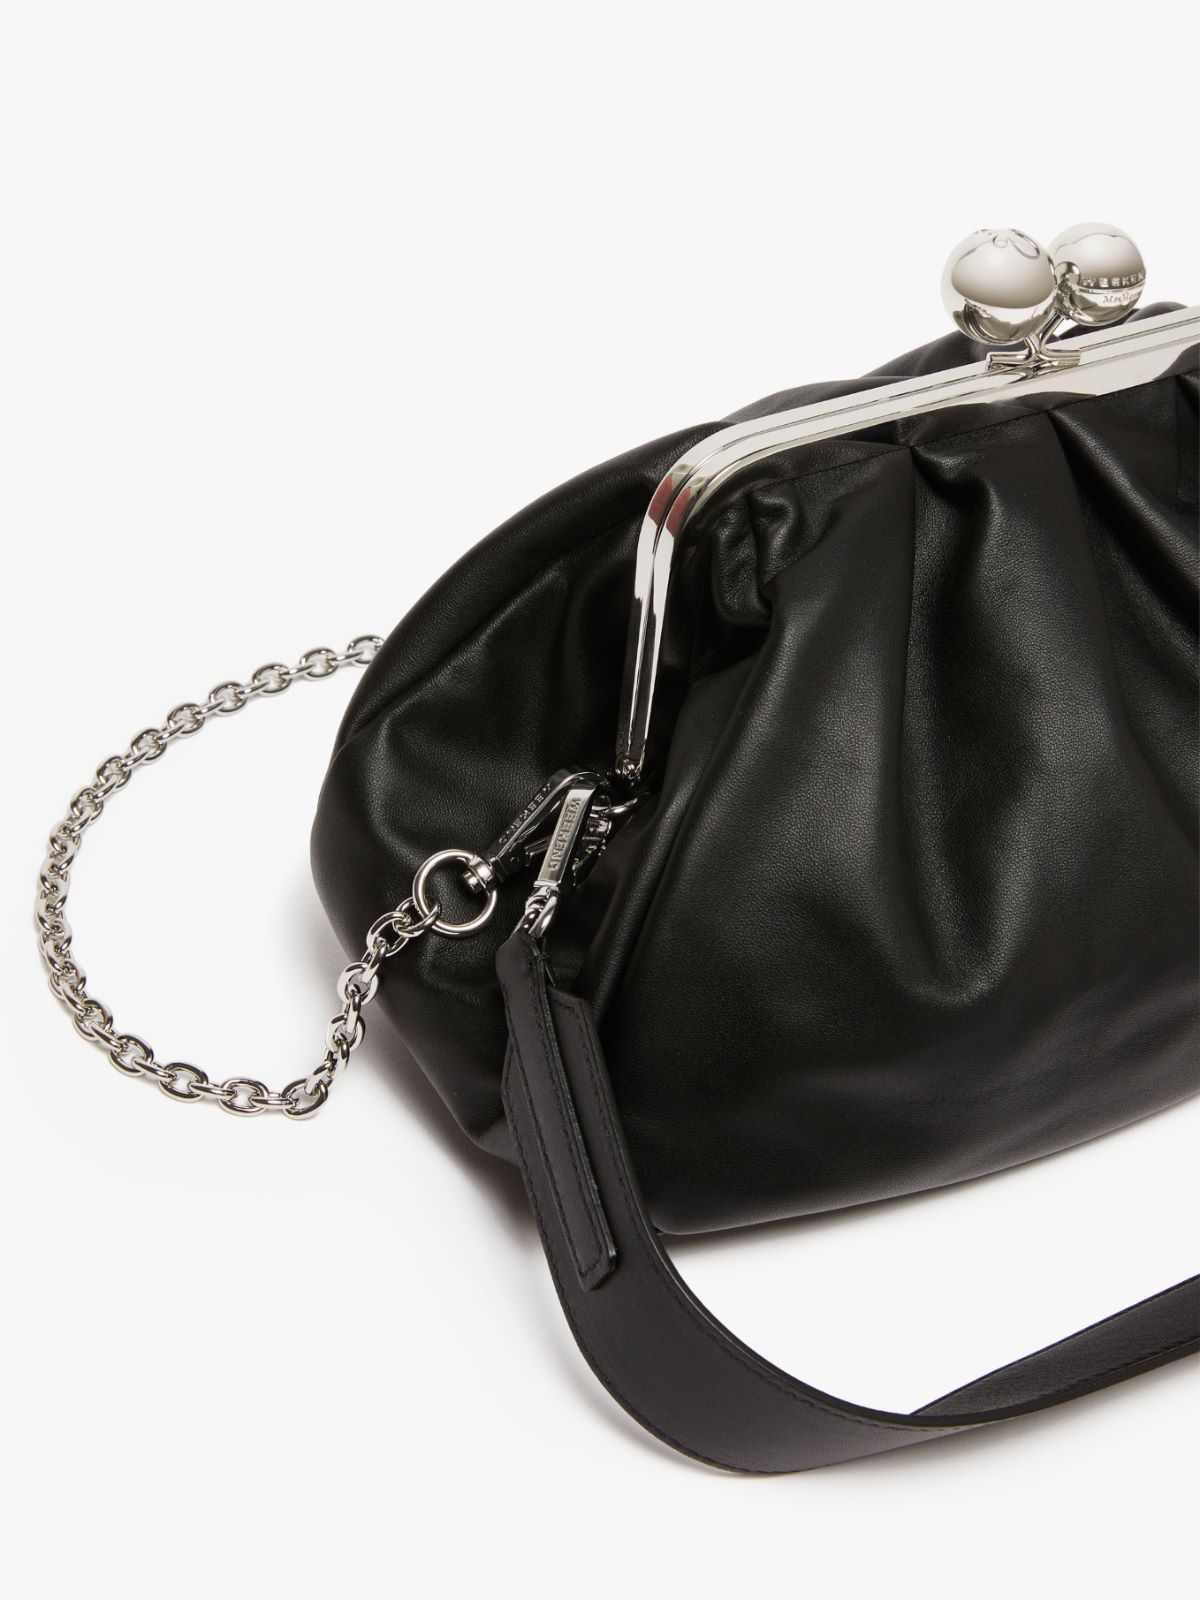 Medium Pasticcino Bag in nappa leather - BLACK - Weekend Max Mara - 4